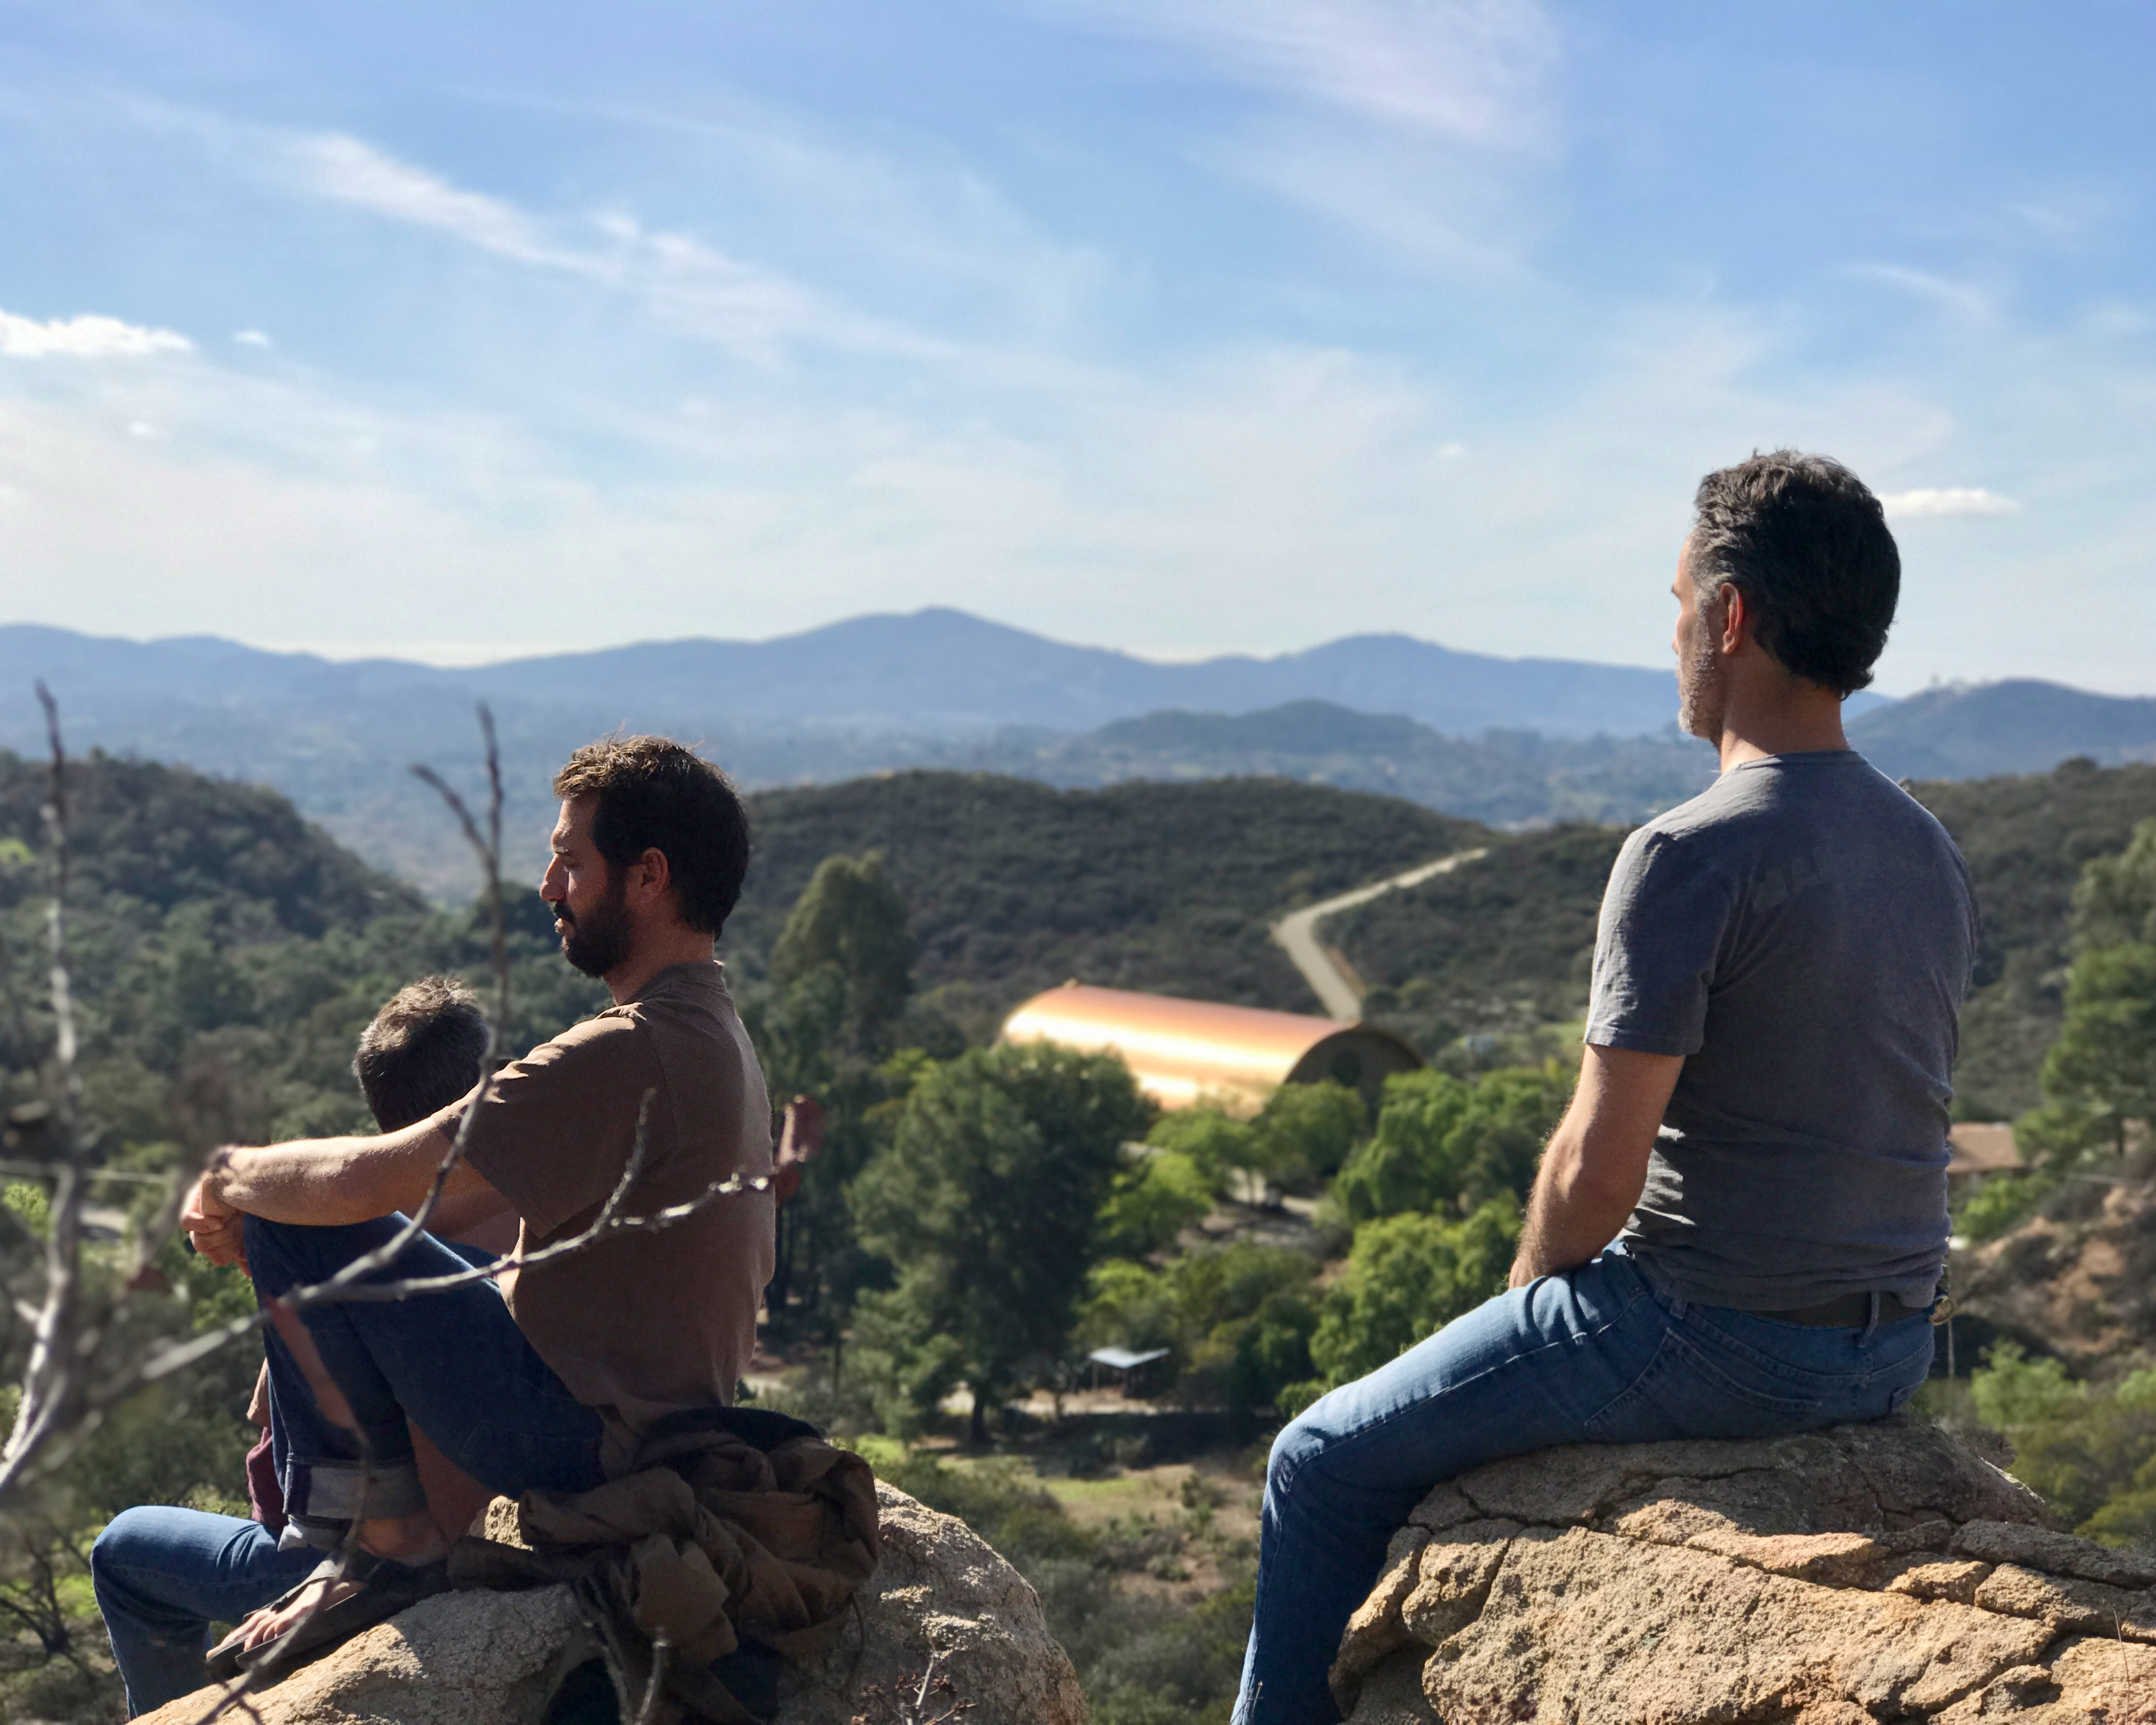 Sentarse en Paz: A Day of Mindfulness